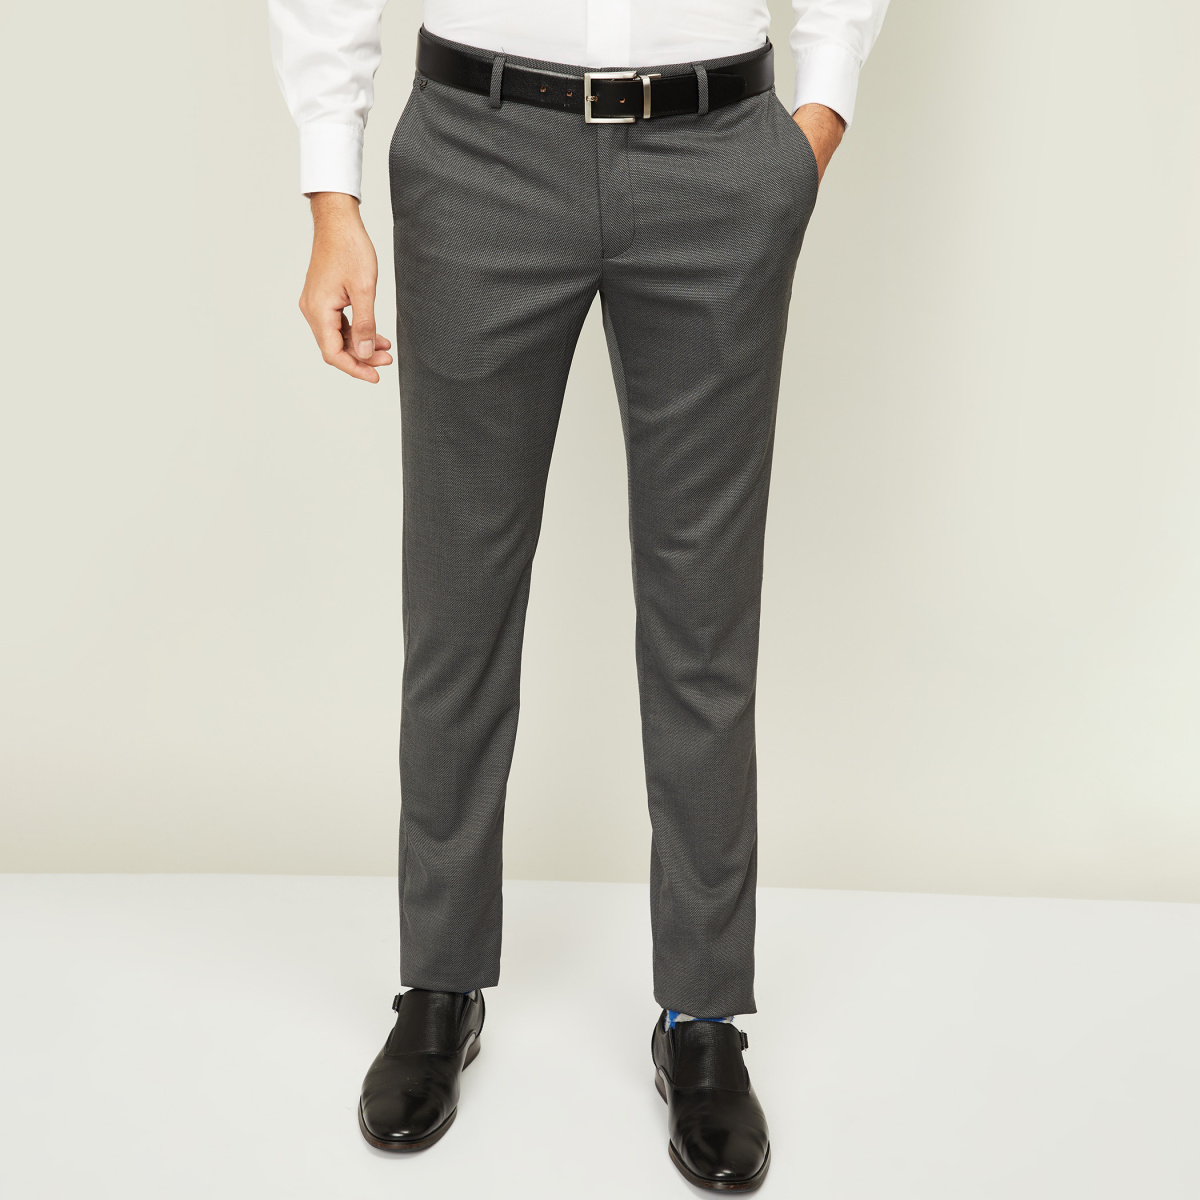 Cauchy formal Pants for Men  Mens Slim fit Formal Pant  Trouser  Office  wear